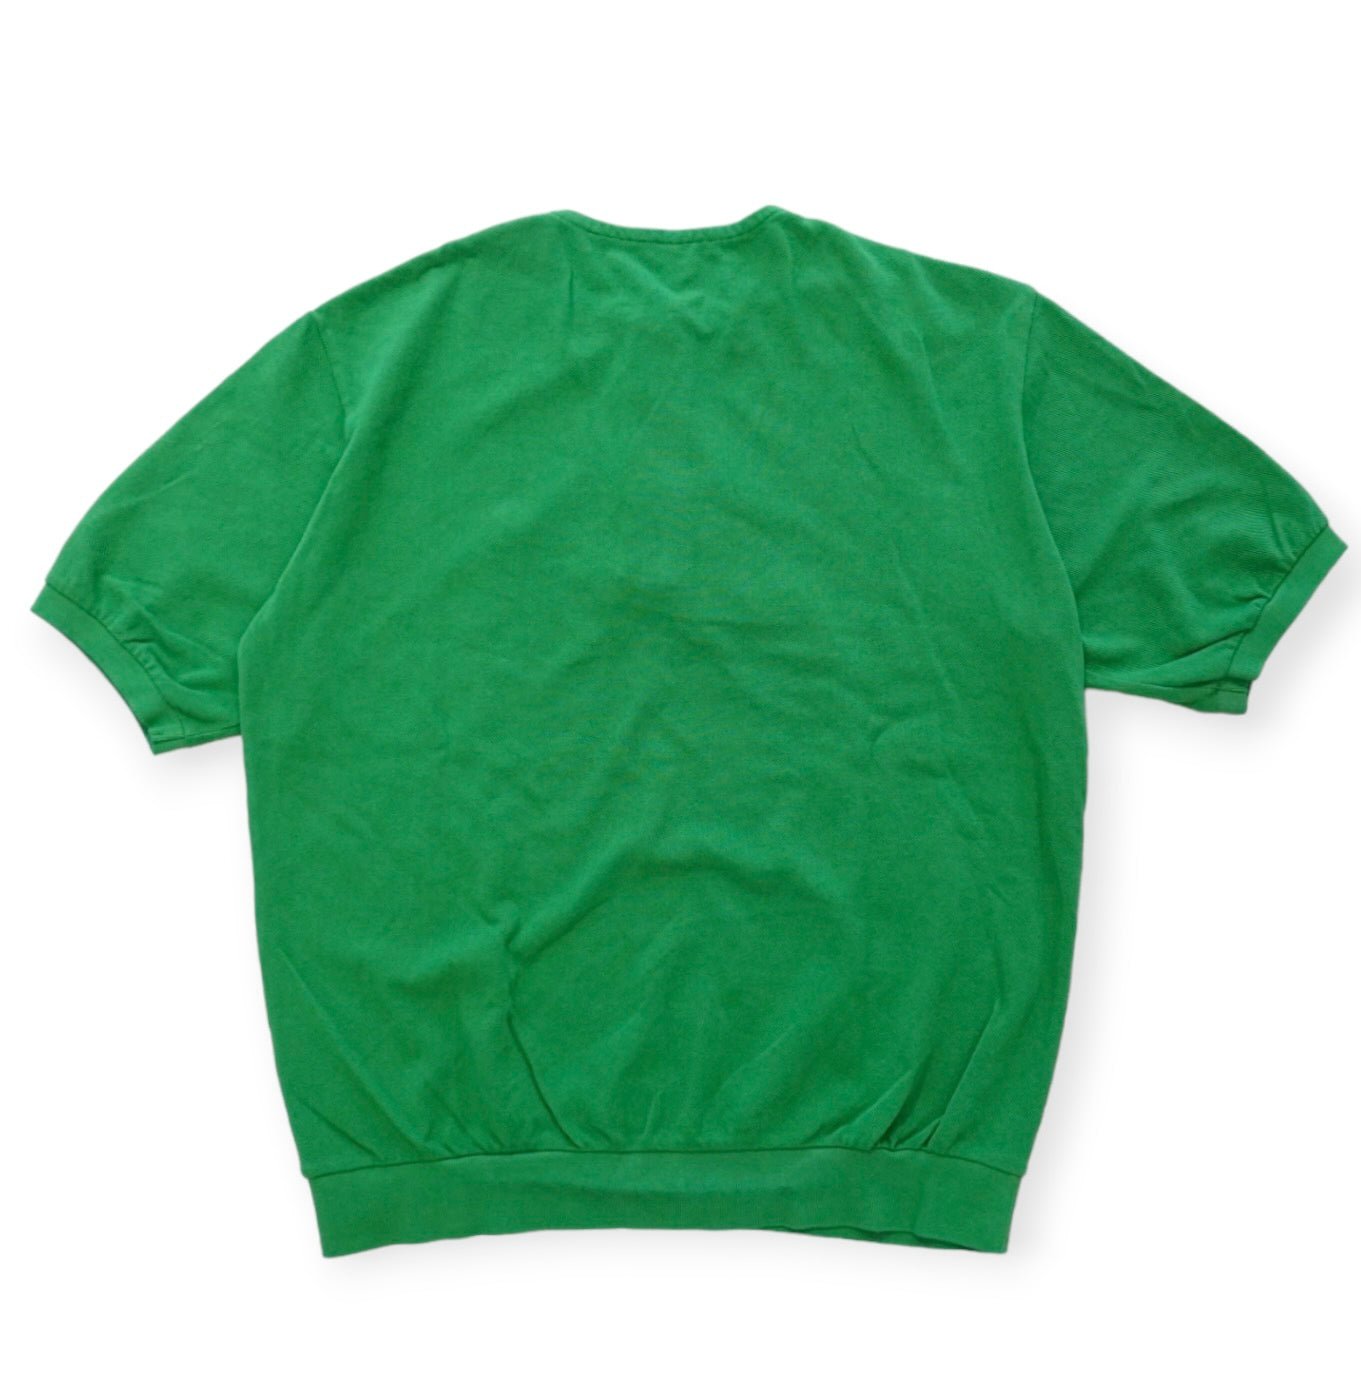 [SCYEBASICS] Cotton Pique Henley Neck Shirt ポロシャツ - #shop_name #アパルティール# #名古屋# #セレクトショップ#